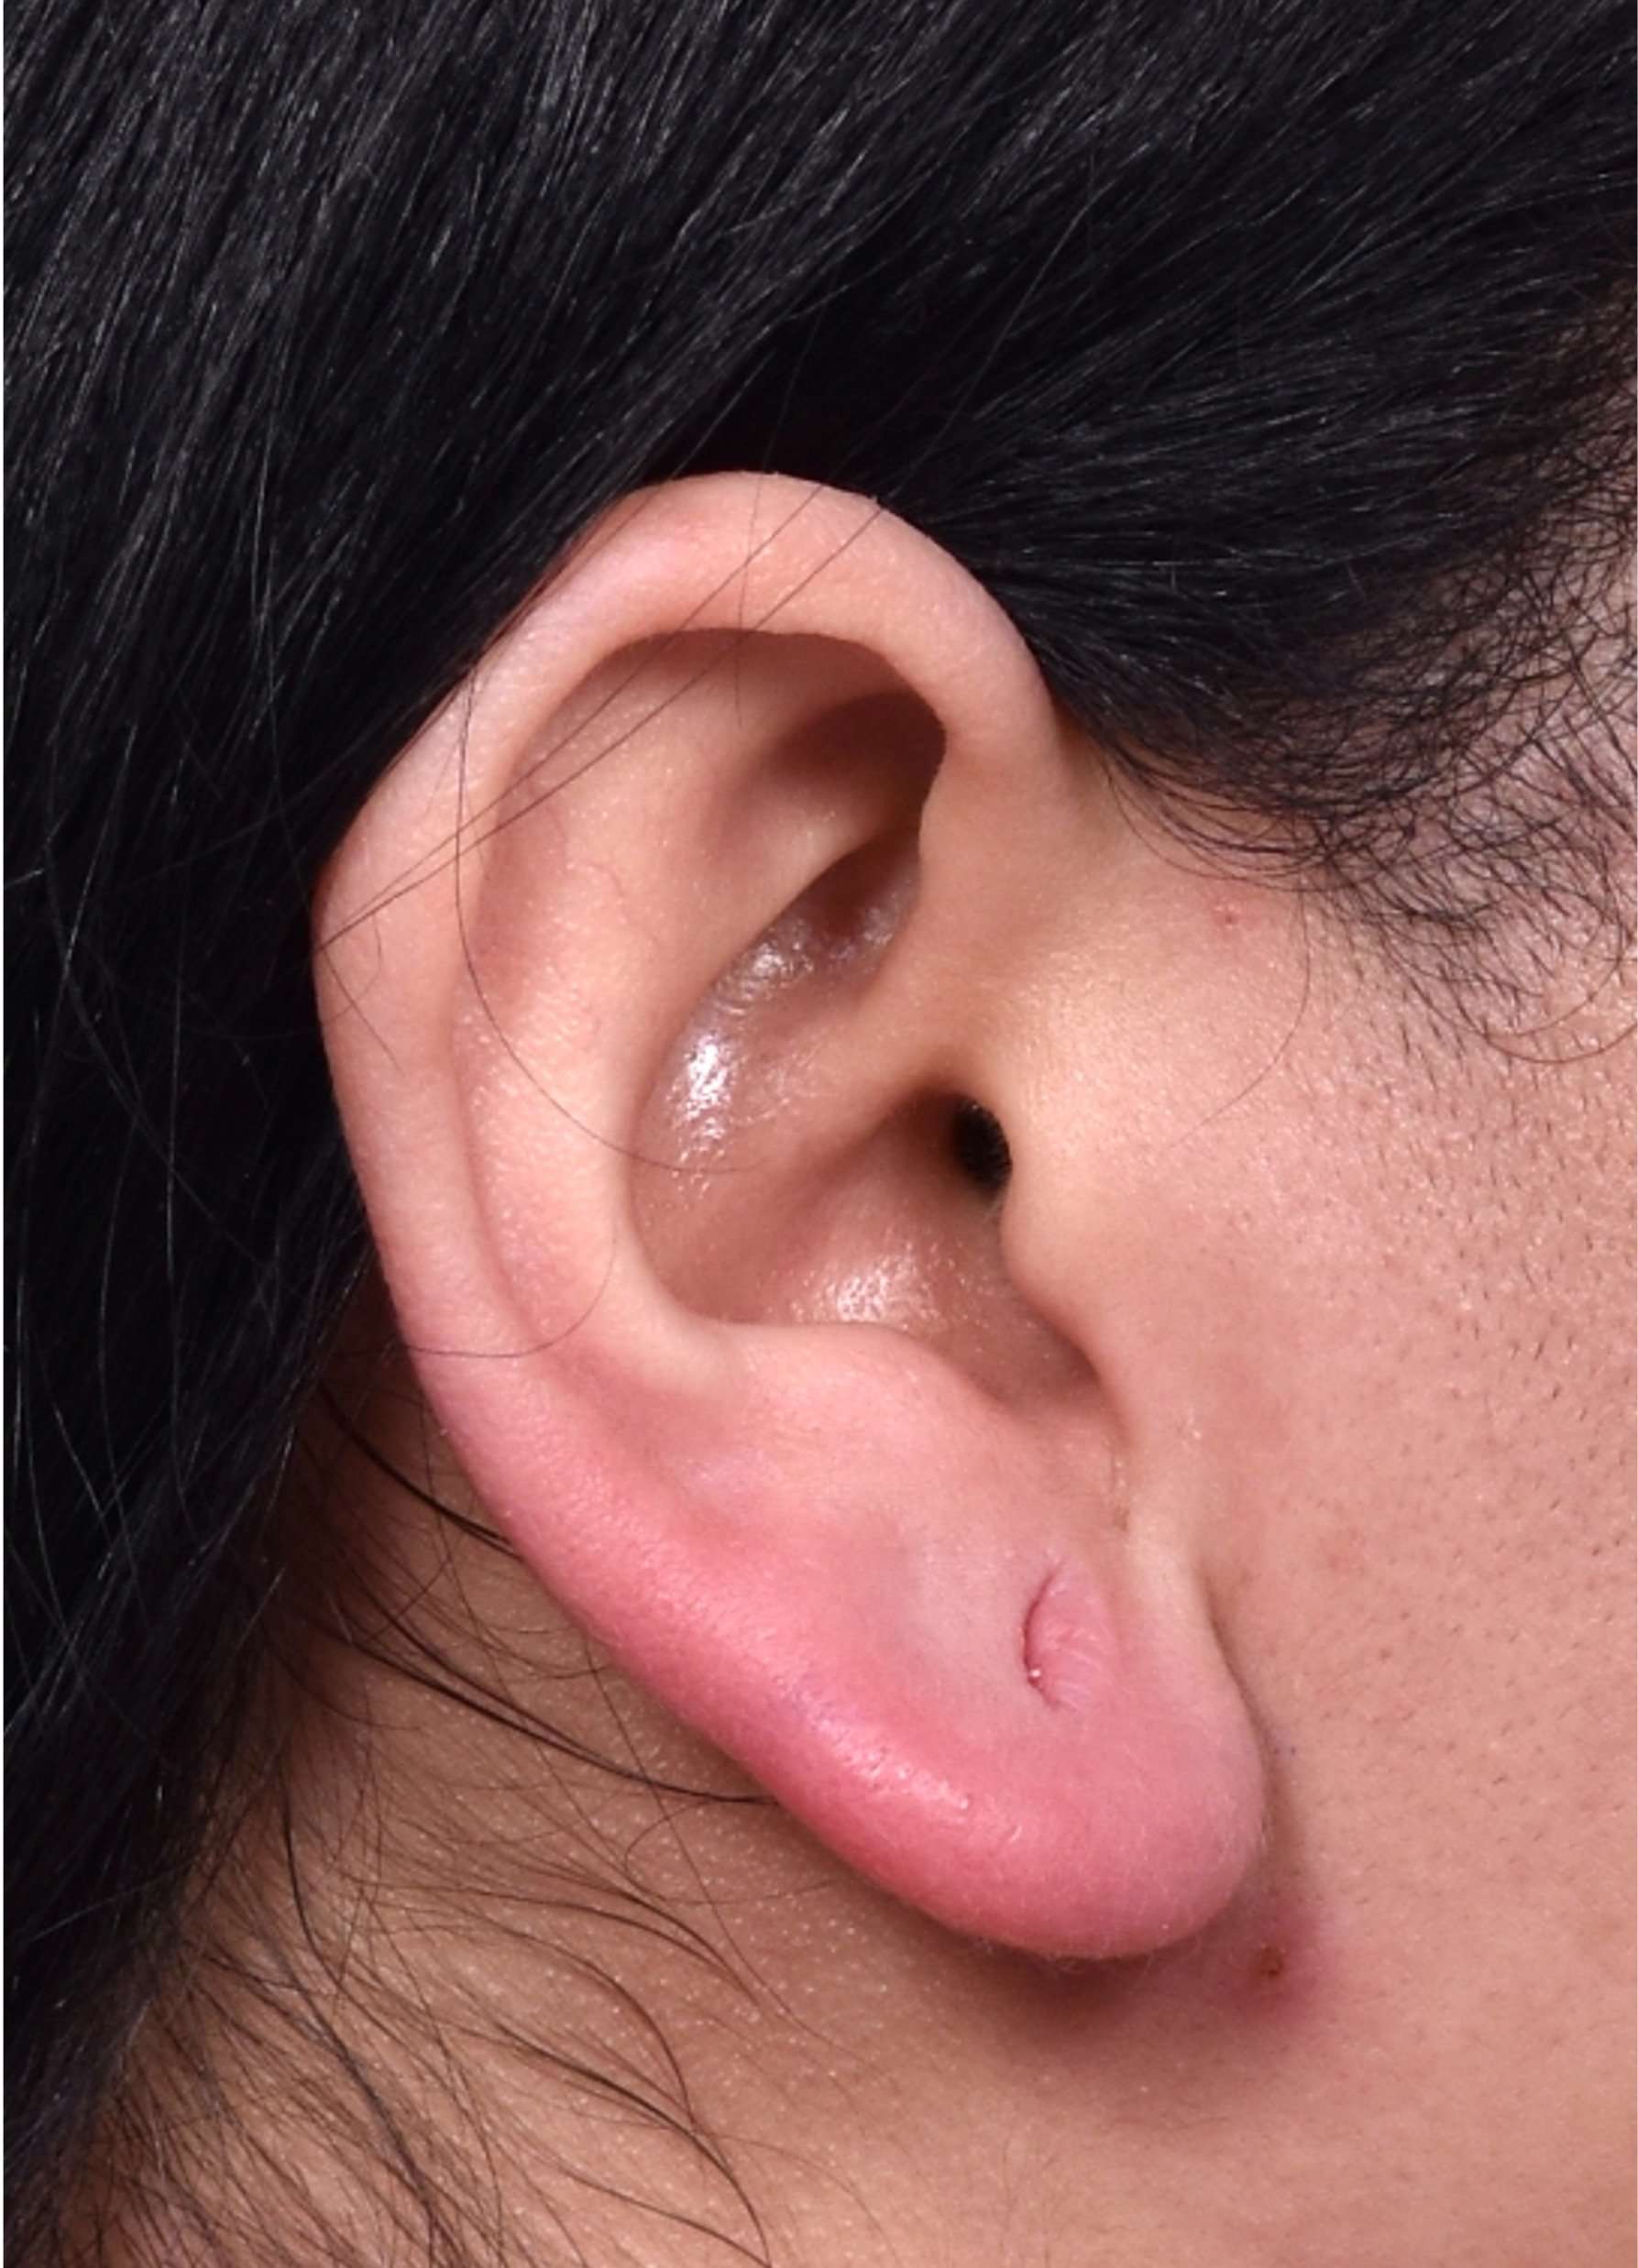 Gauged earlobe reduction repair